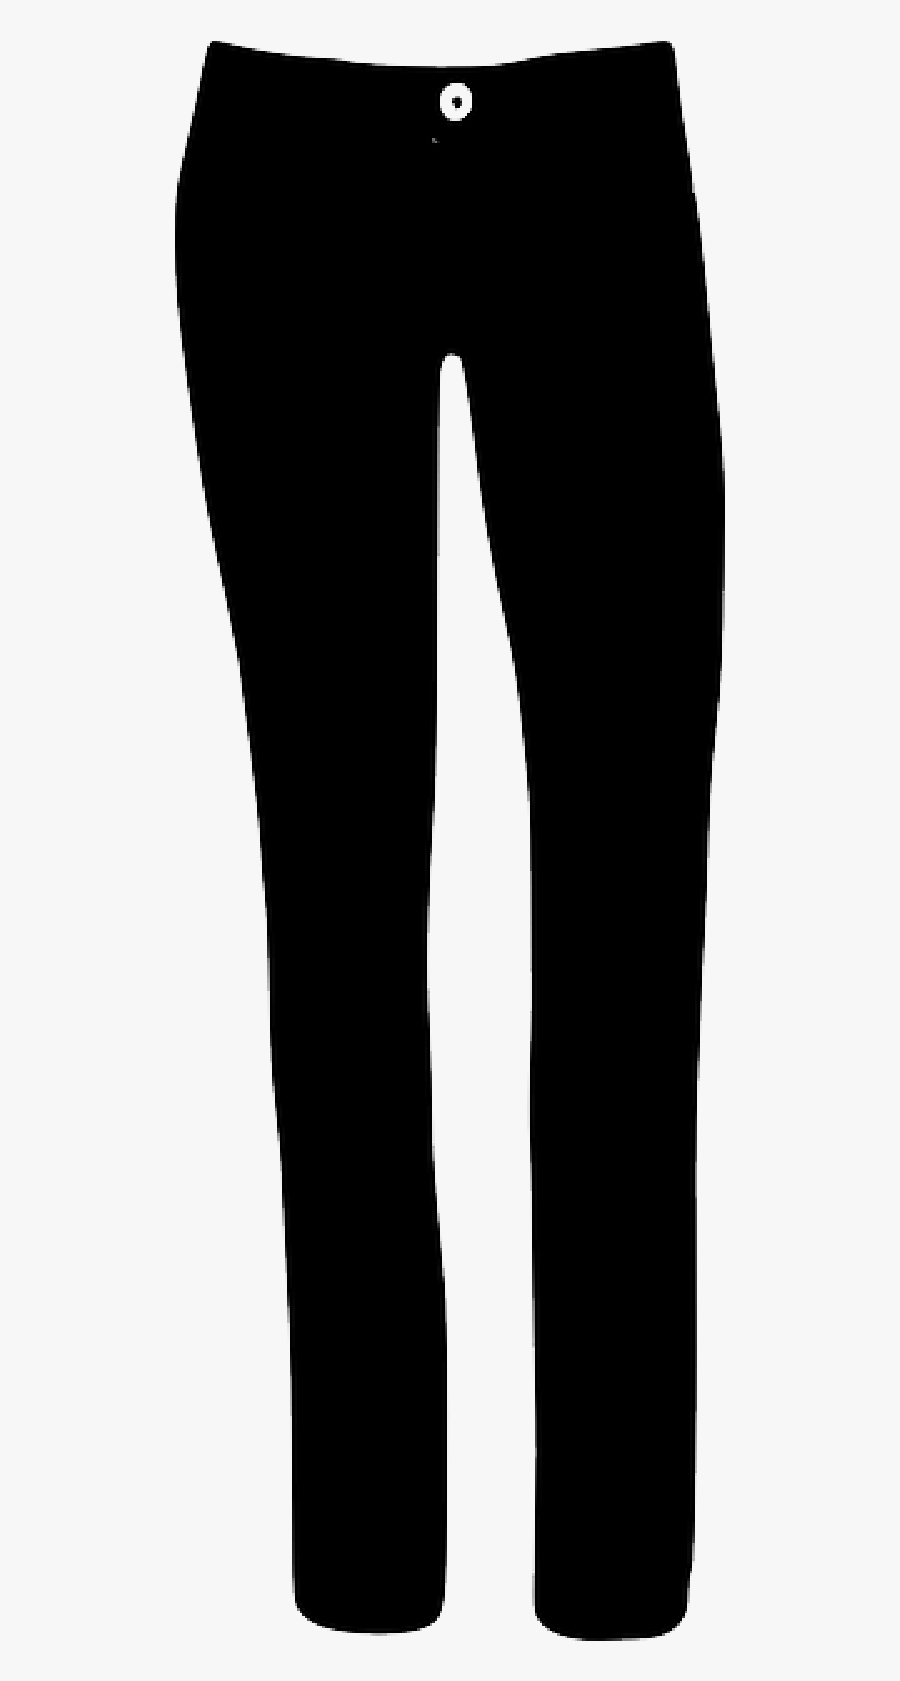 Trousers Png Image - Ladies Black Trousers Vector, Transparent Clipart